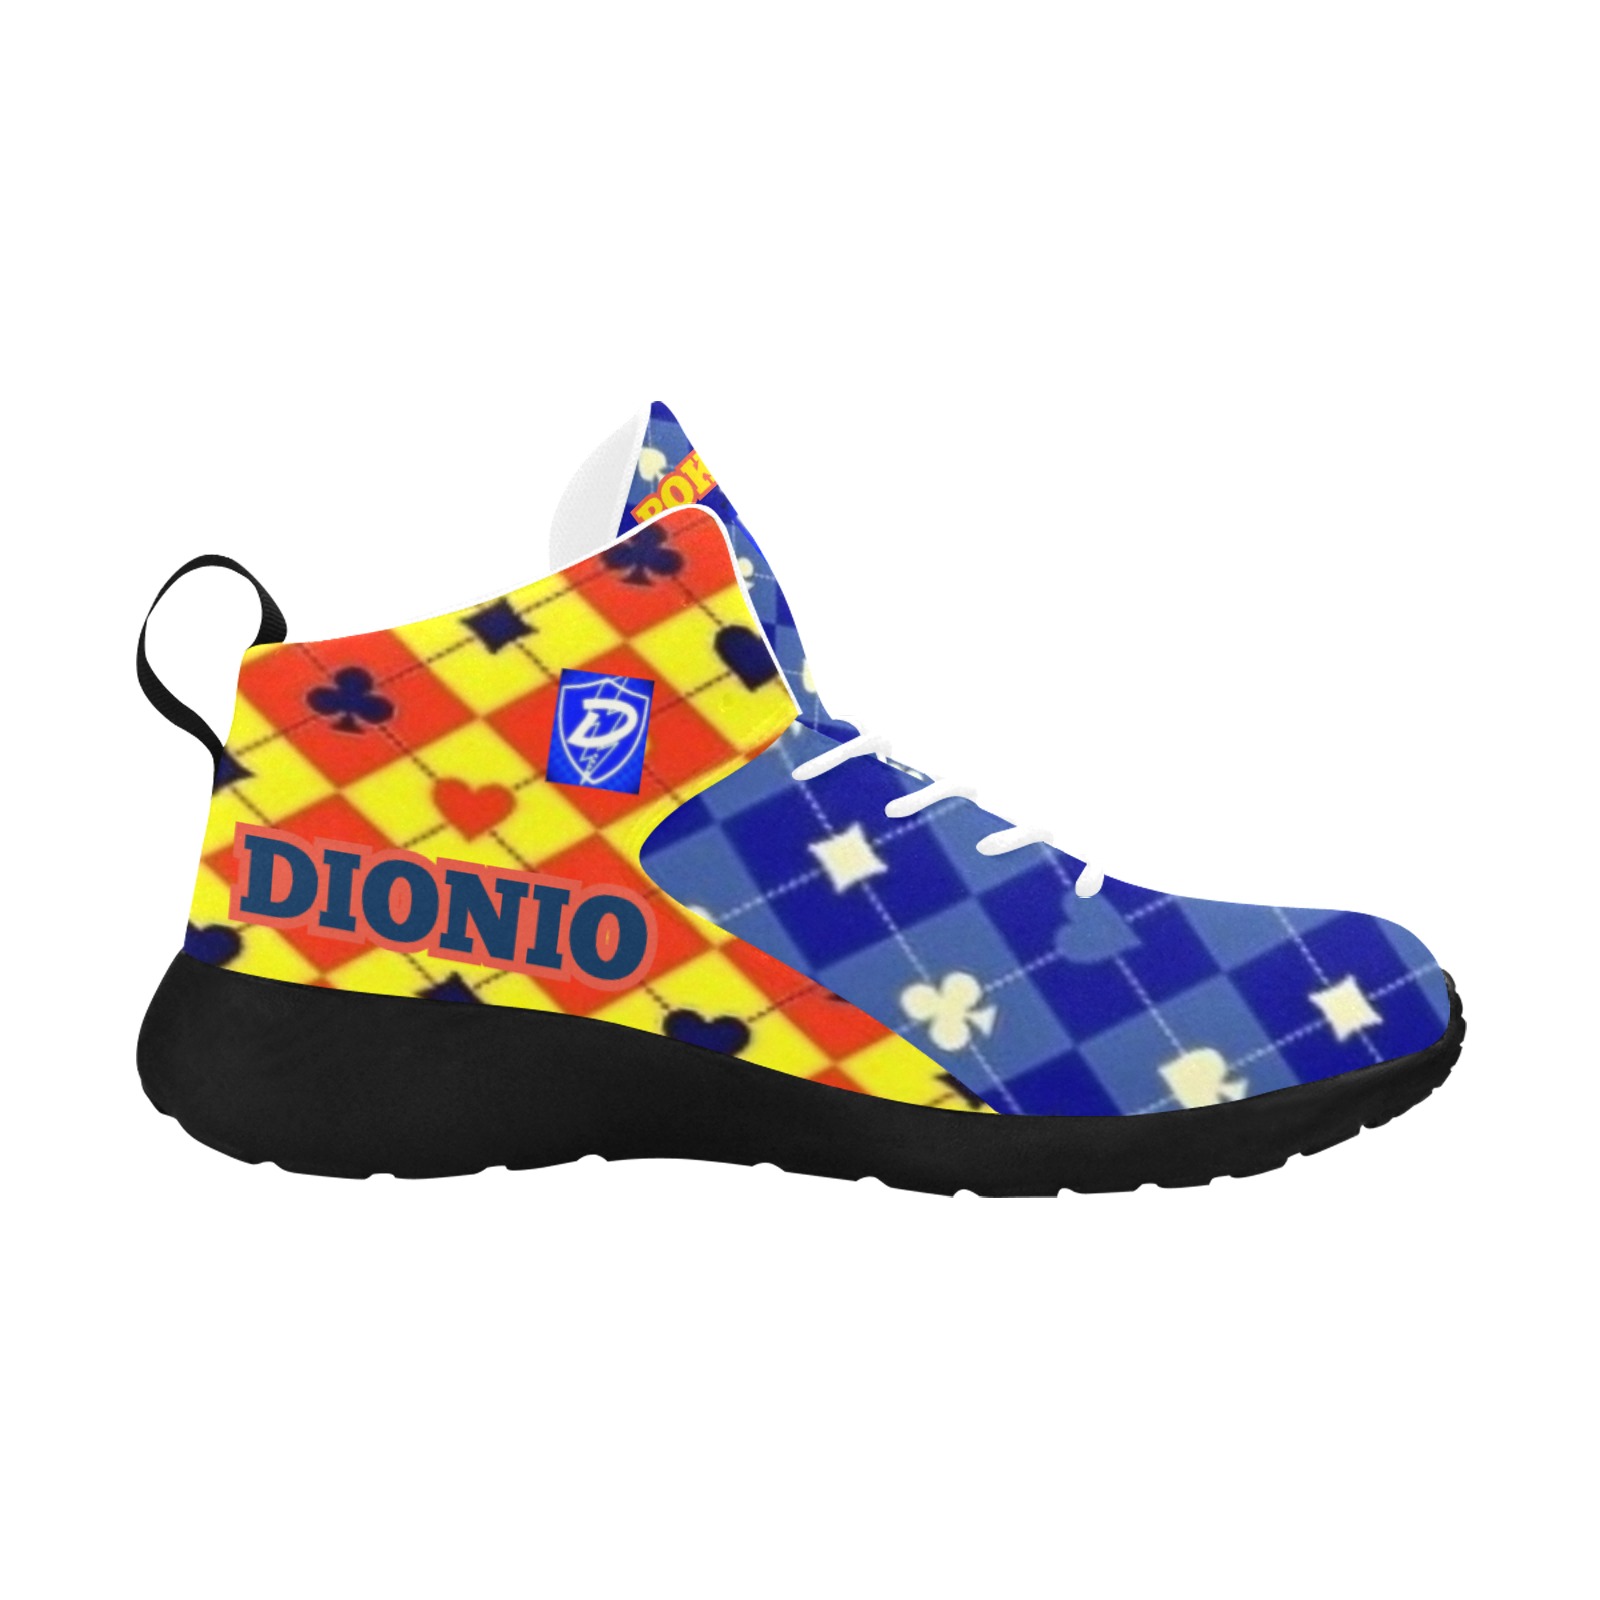 DIONIO - Pokerface 2.0 Men's Chukka Training Shoes (Model 57502)